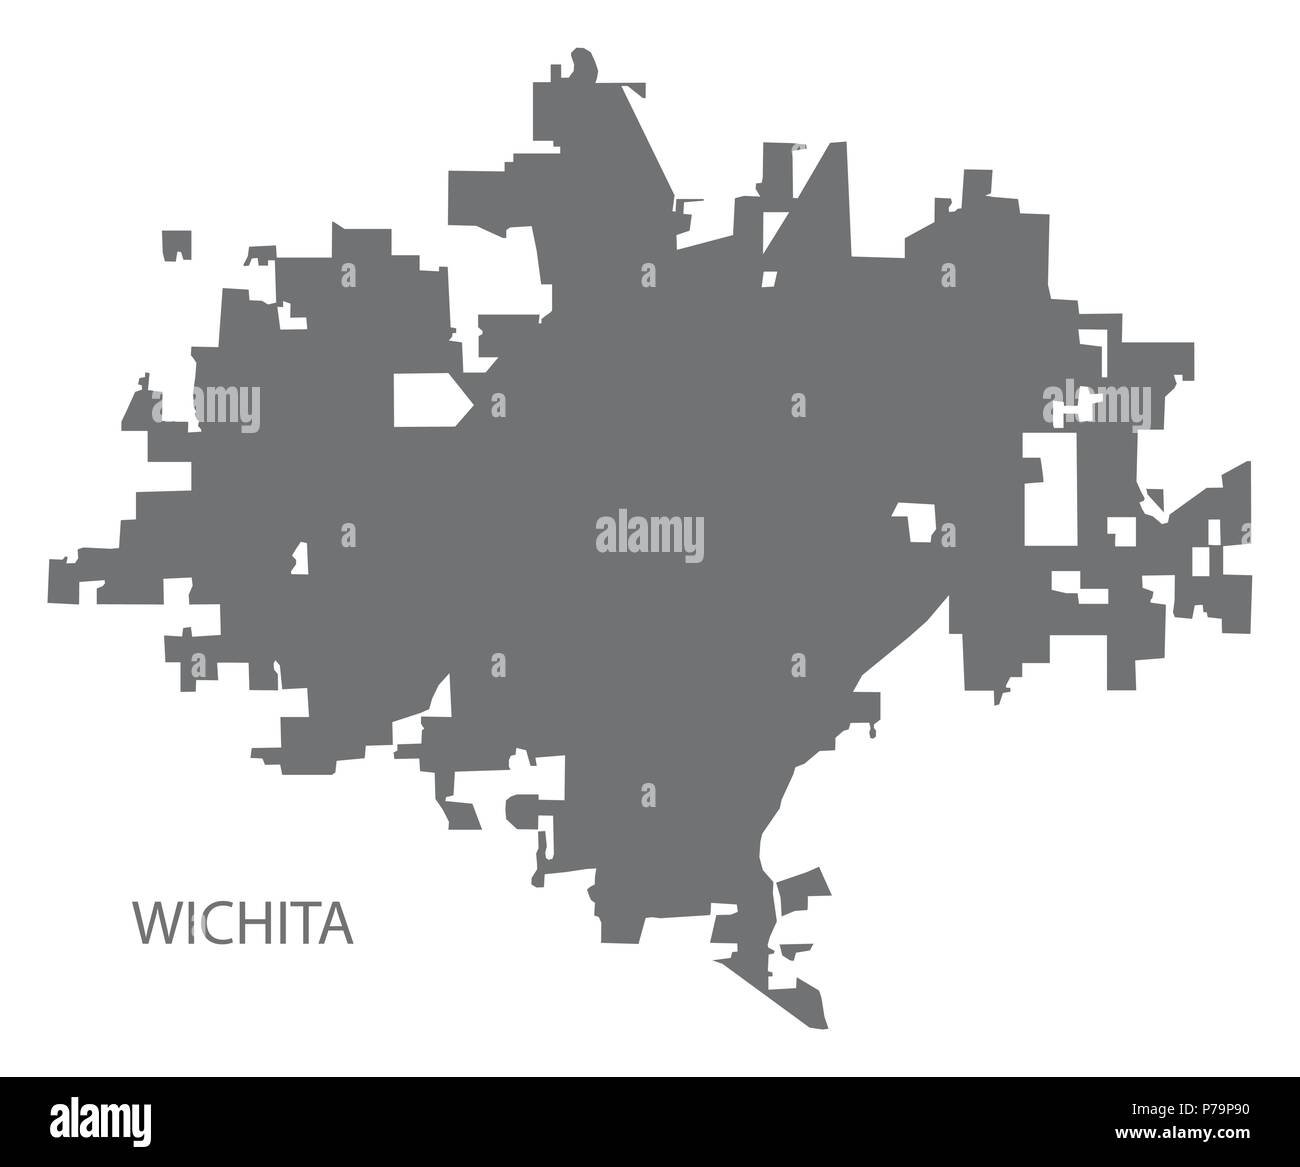 Wichita Kansas City Karte grau Abbildung silhouette Form Stock Vektor